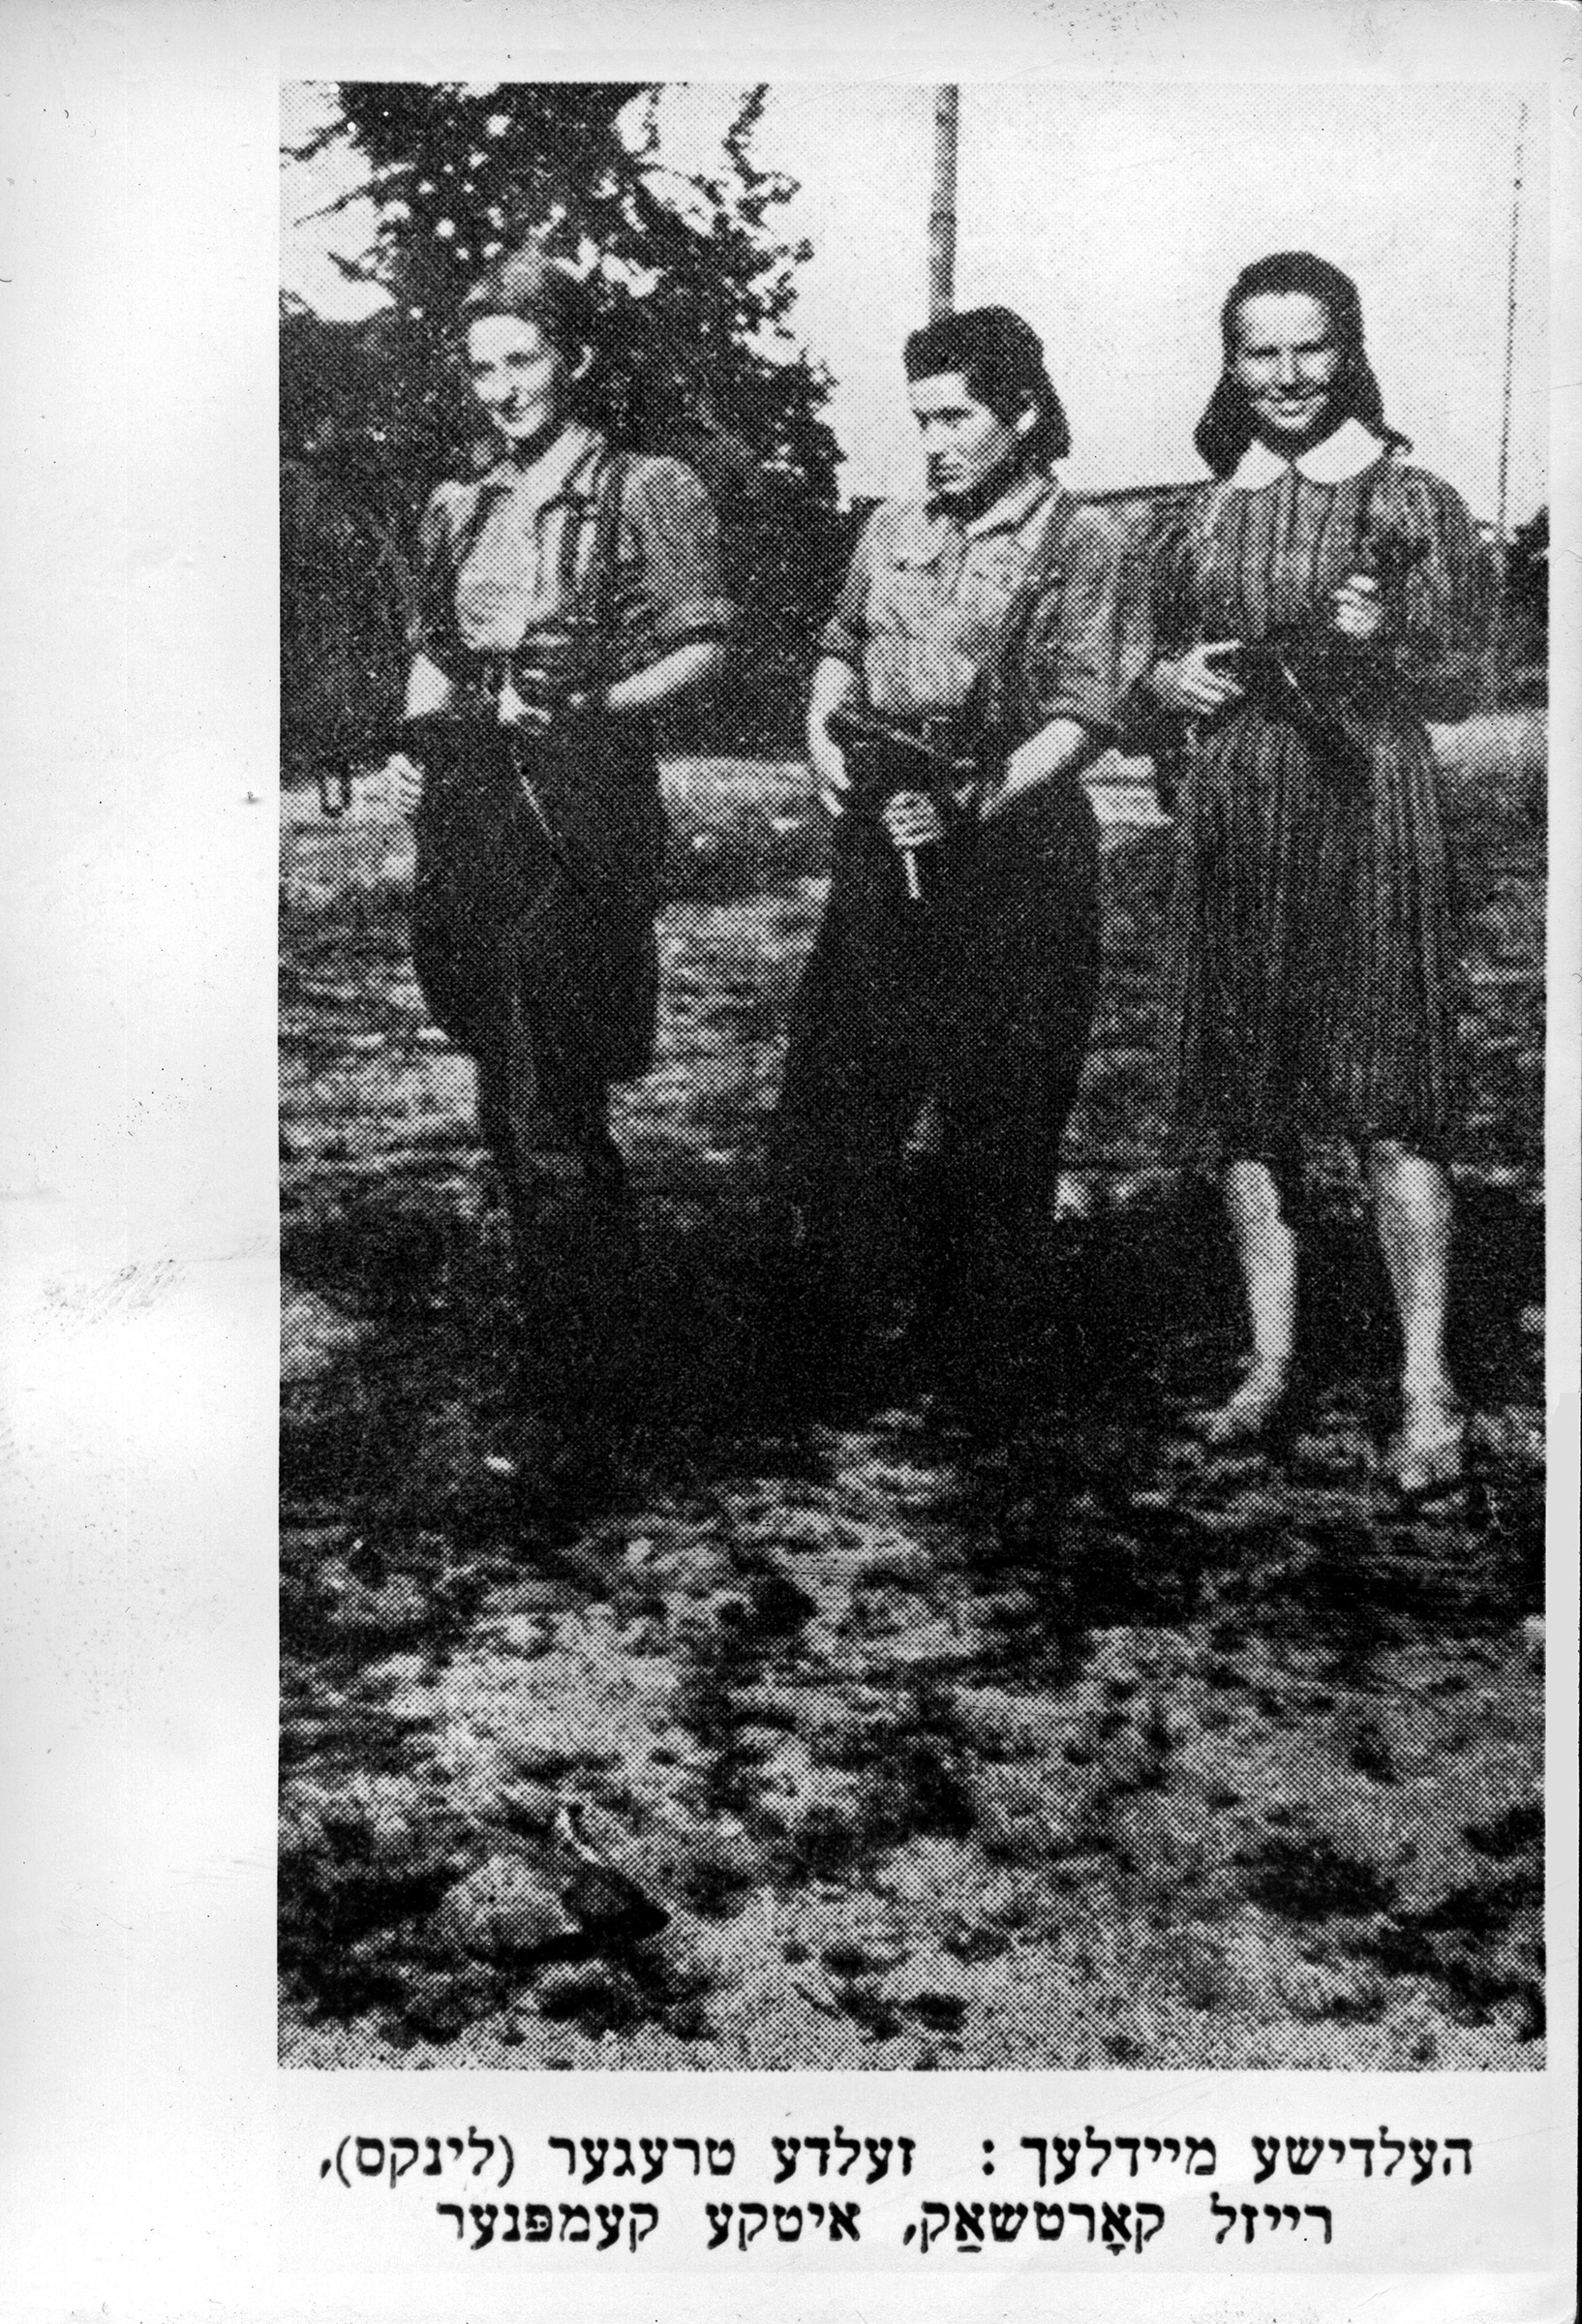 Left to right: Vitka Kempner, Ruzka Korczak, and Zelda Treger. (Courtesy of Yad Vashem Photo Archive, Jerusalem. 2921/209)